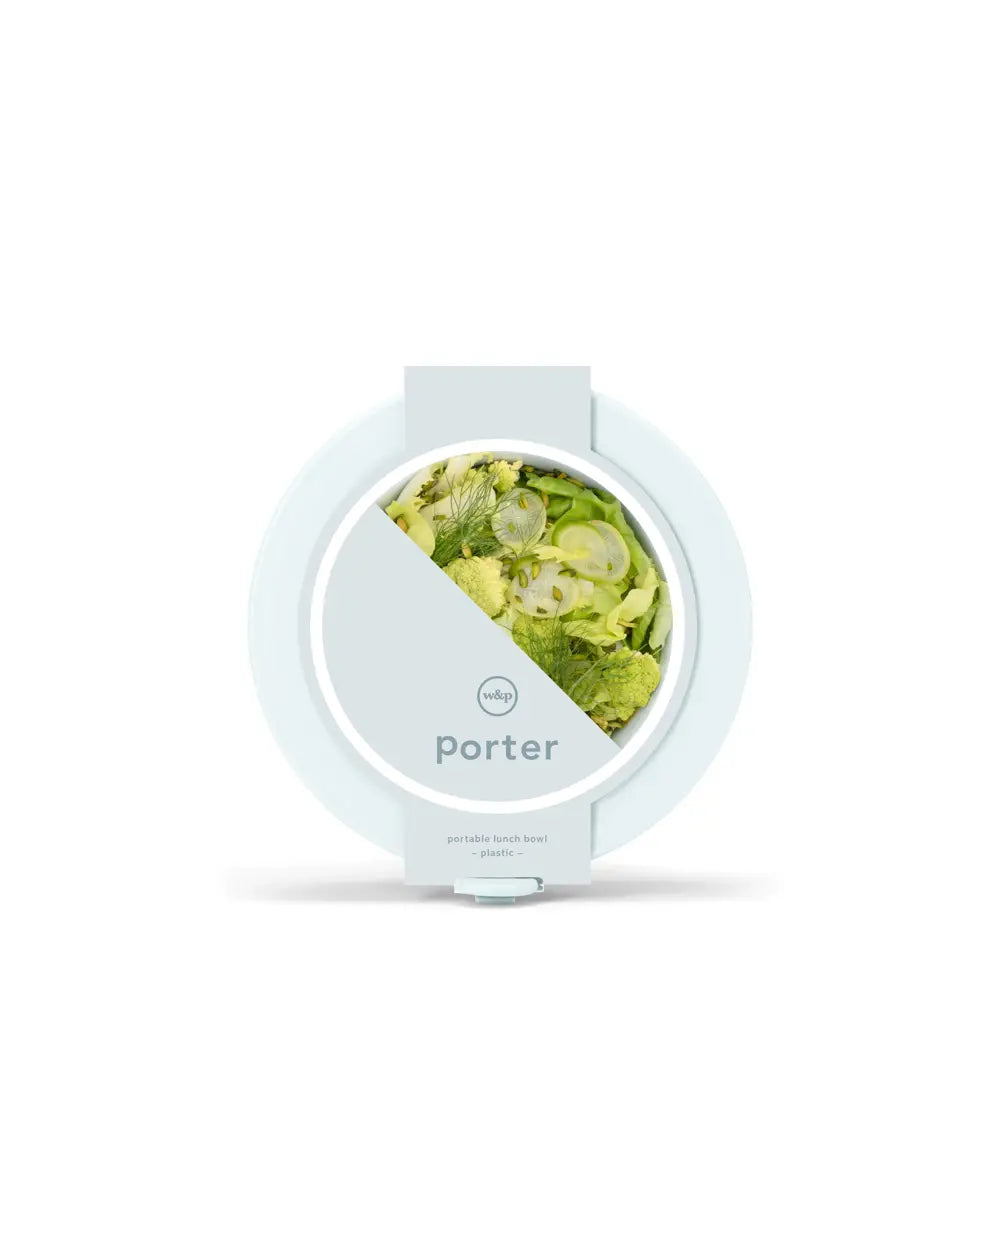 The Porter Plastic Bowl